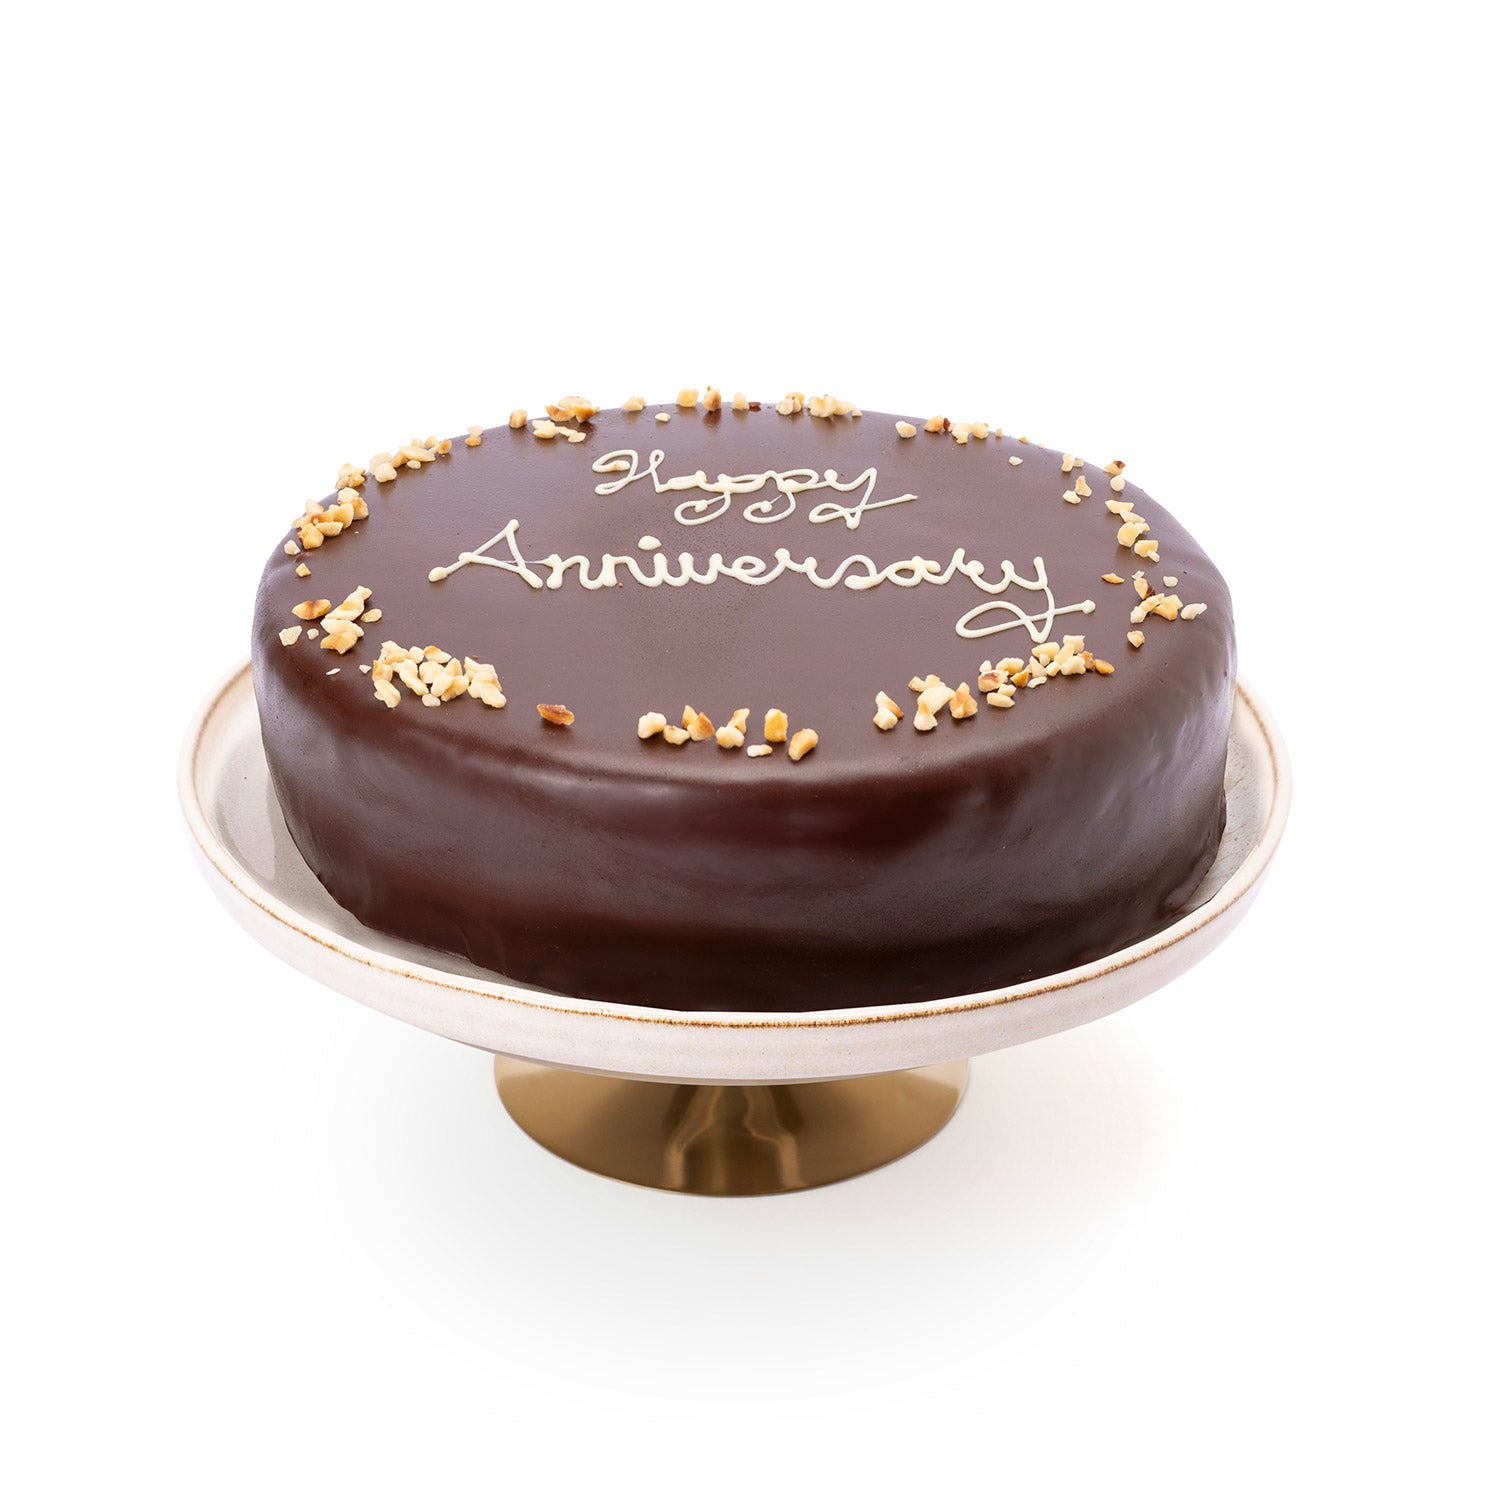 cakes-base-celebration-anniversary-1-web_7ca87955-0066-4ba6-ab79-f475e81381f3.jpg